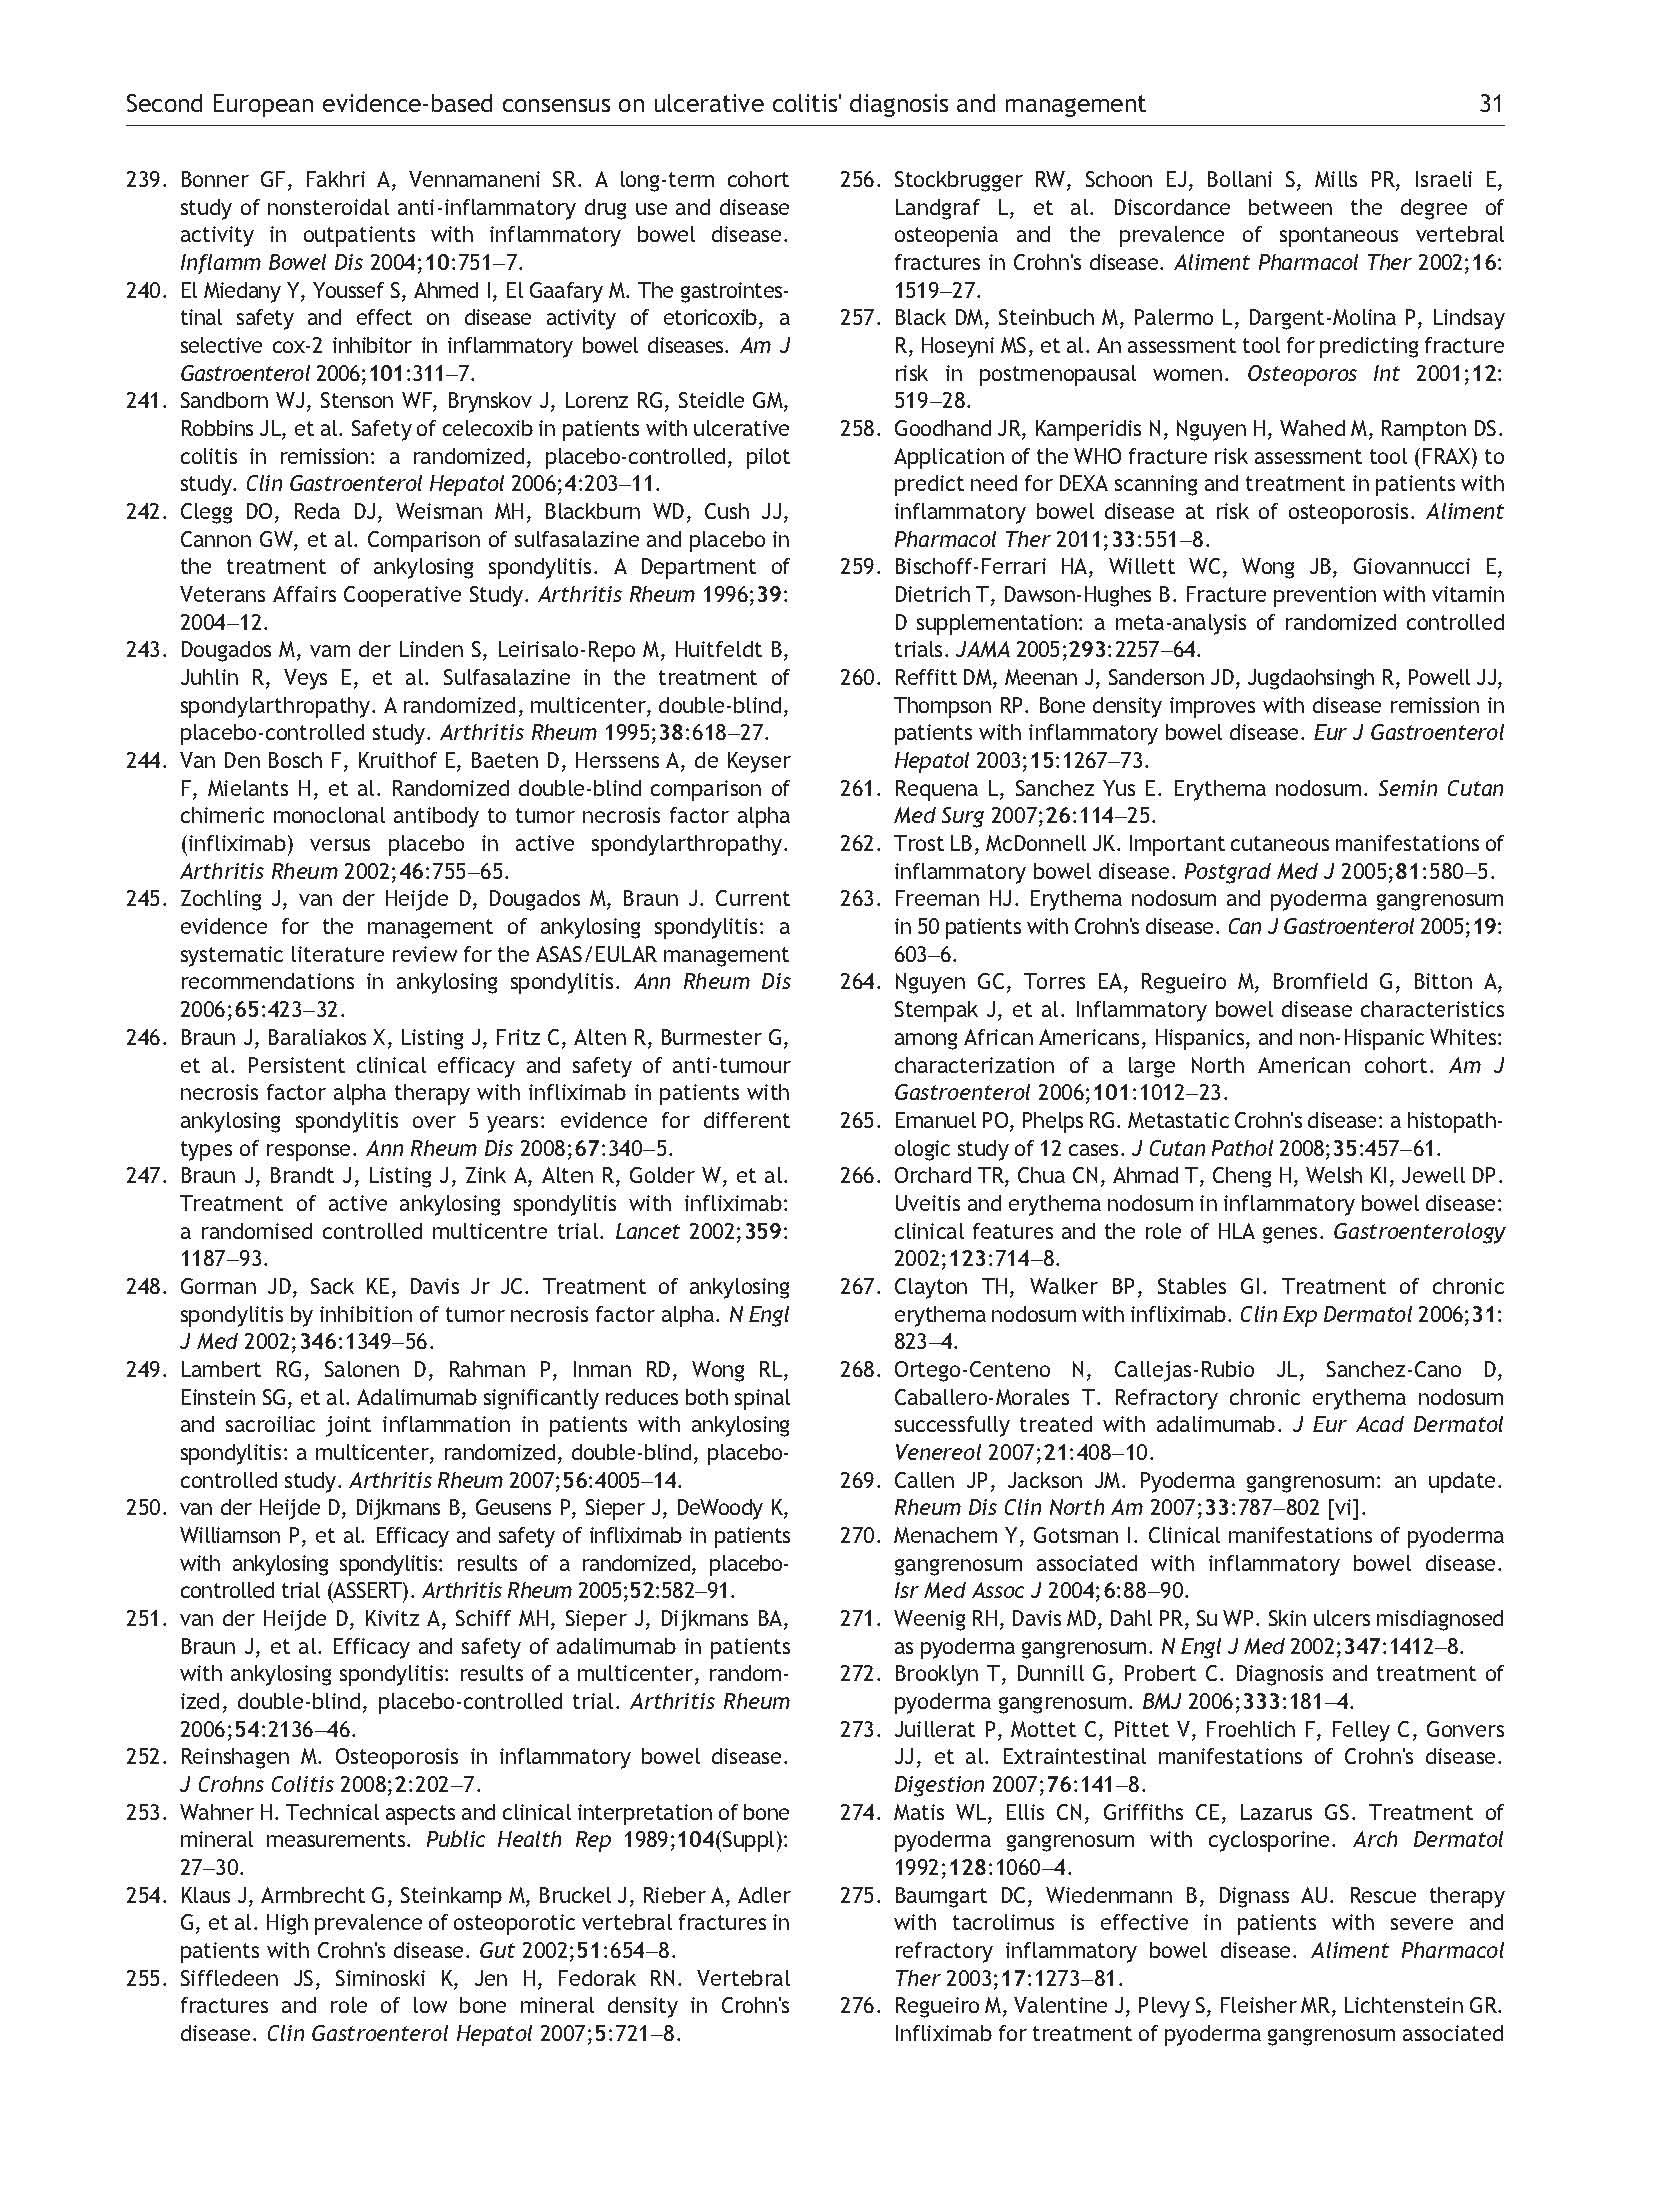 2012-ECCO第二版-欧洲询证共识：溃疡性结肠炎的诊断和处理—特殊情况_页面_31.jpg